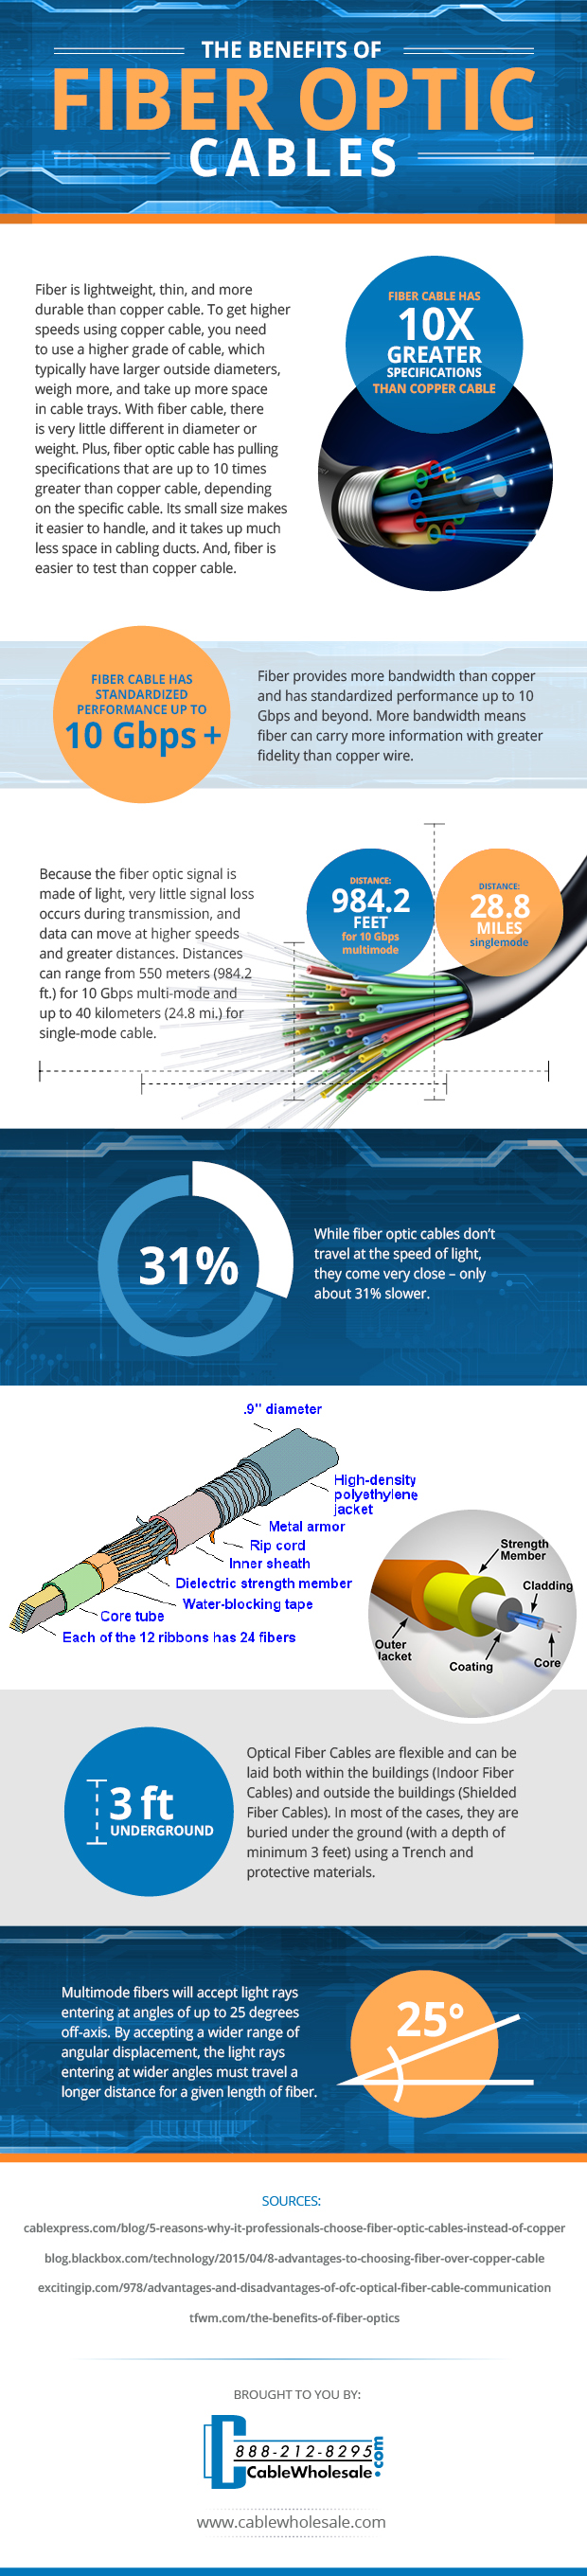 The Benefits of Fiber Optic Cables